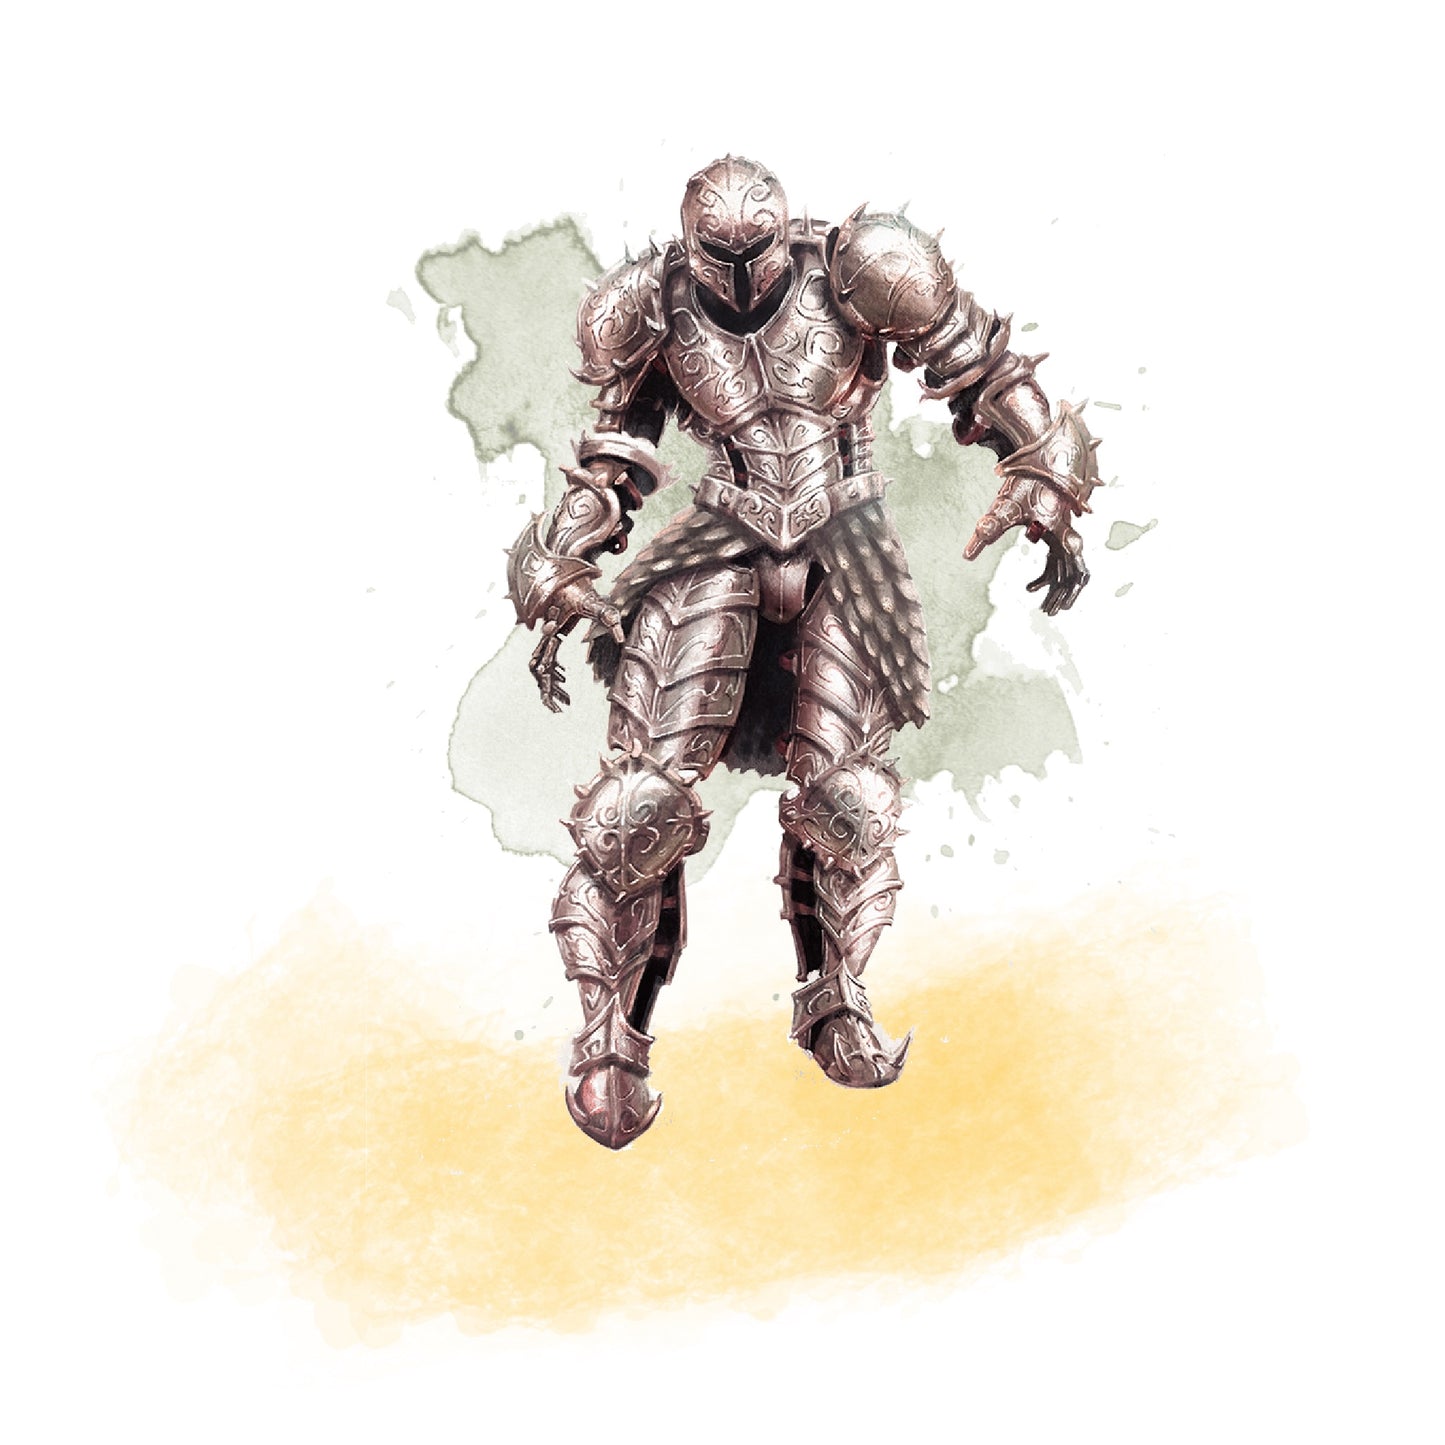 Metal DnD Dice Set - Animated Armor